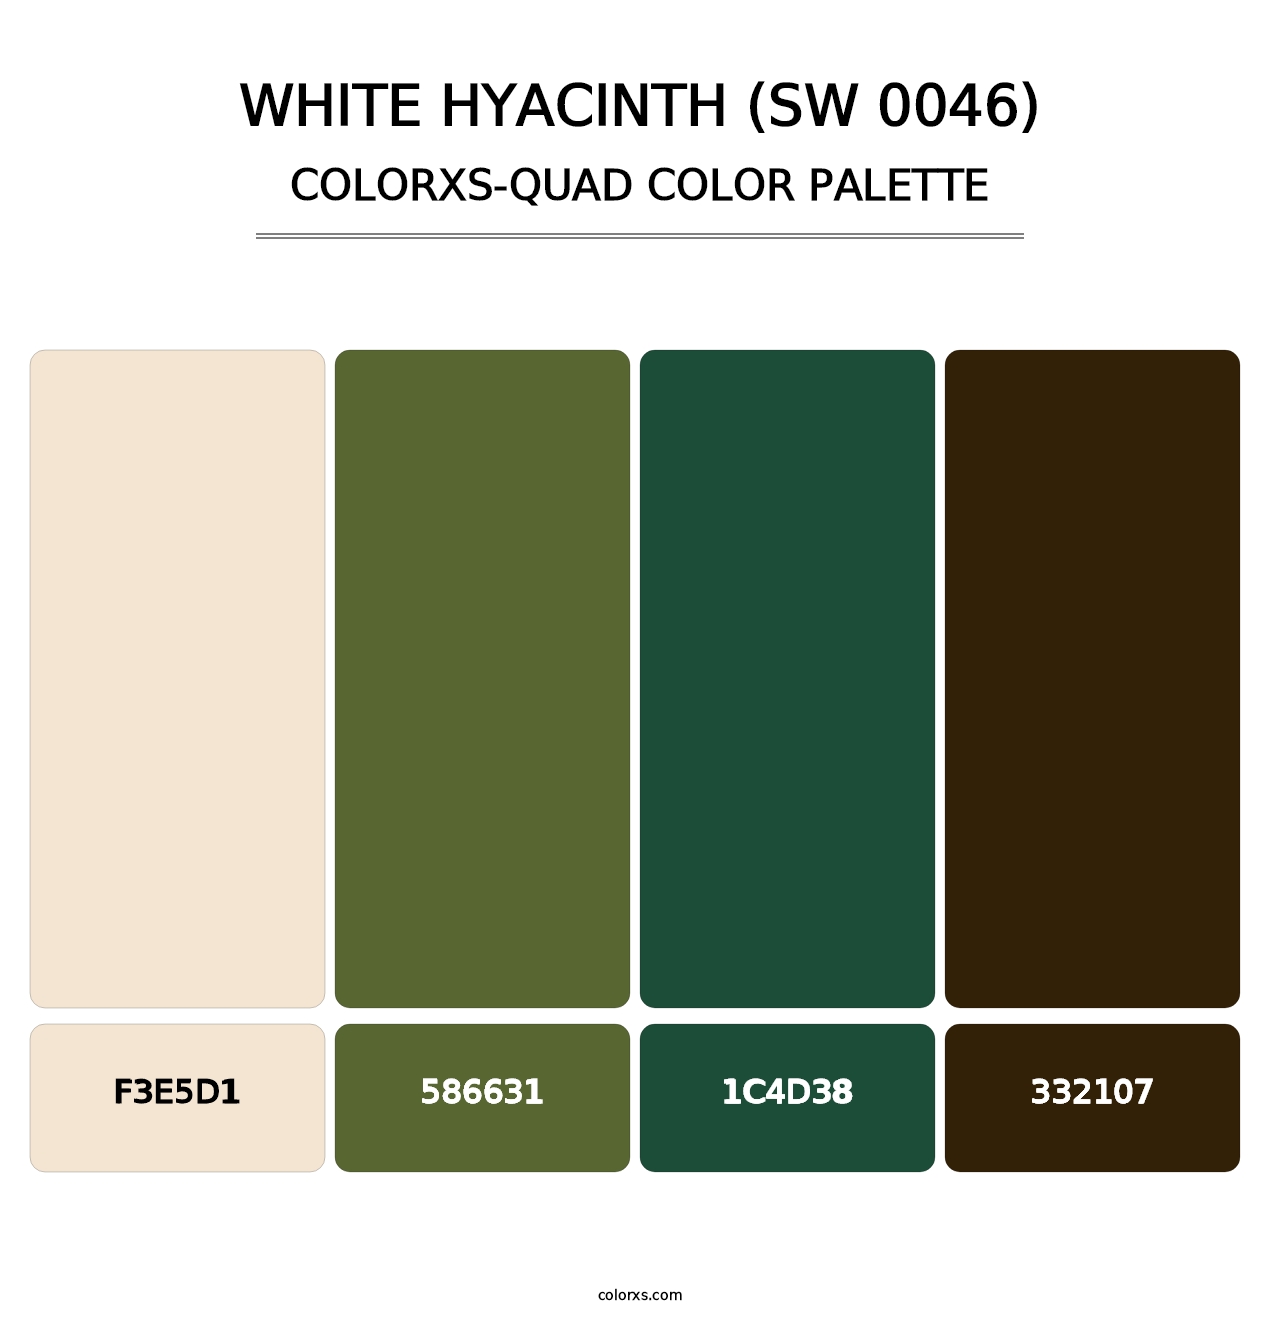 White Hyacinth (SW 0046) - Colorxs Quad Palette